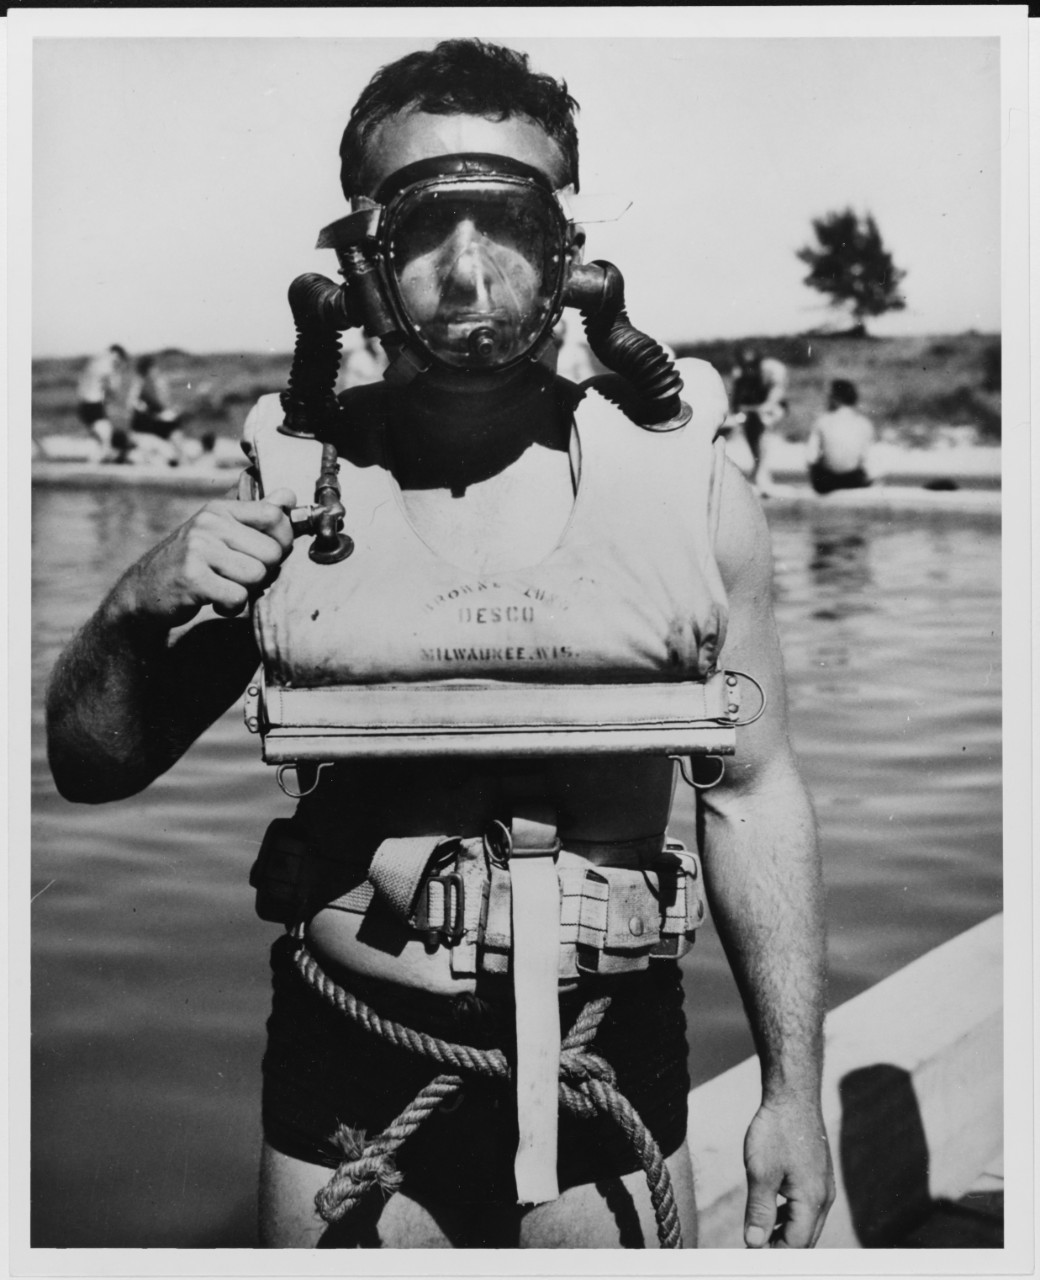 Underwater demolition team member